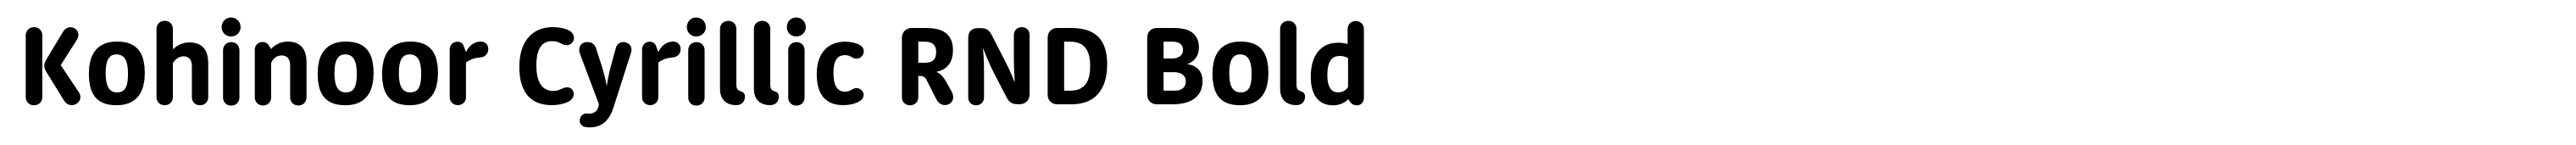 Kohinoor Cyrillic RND Bold